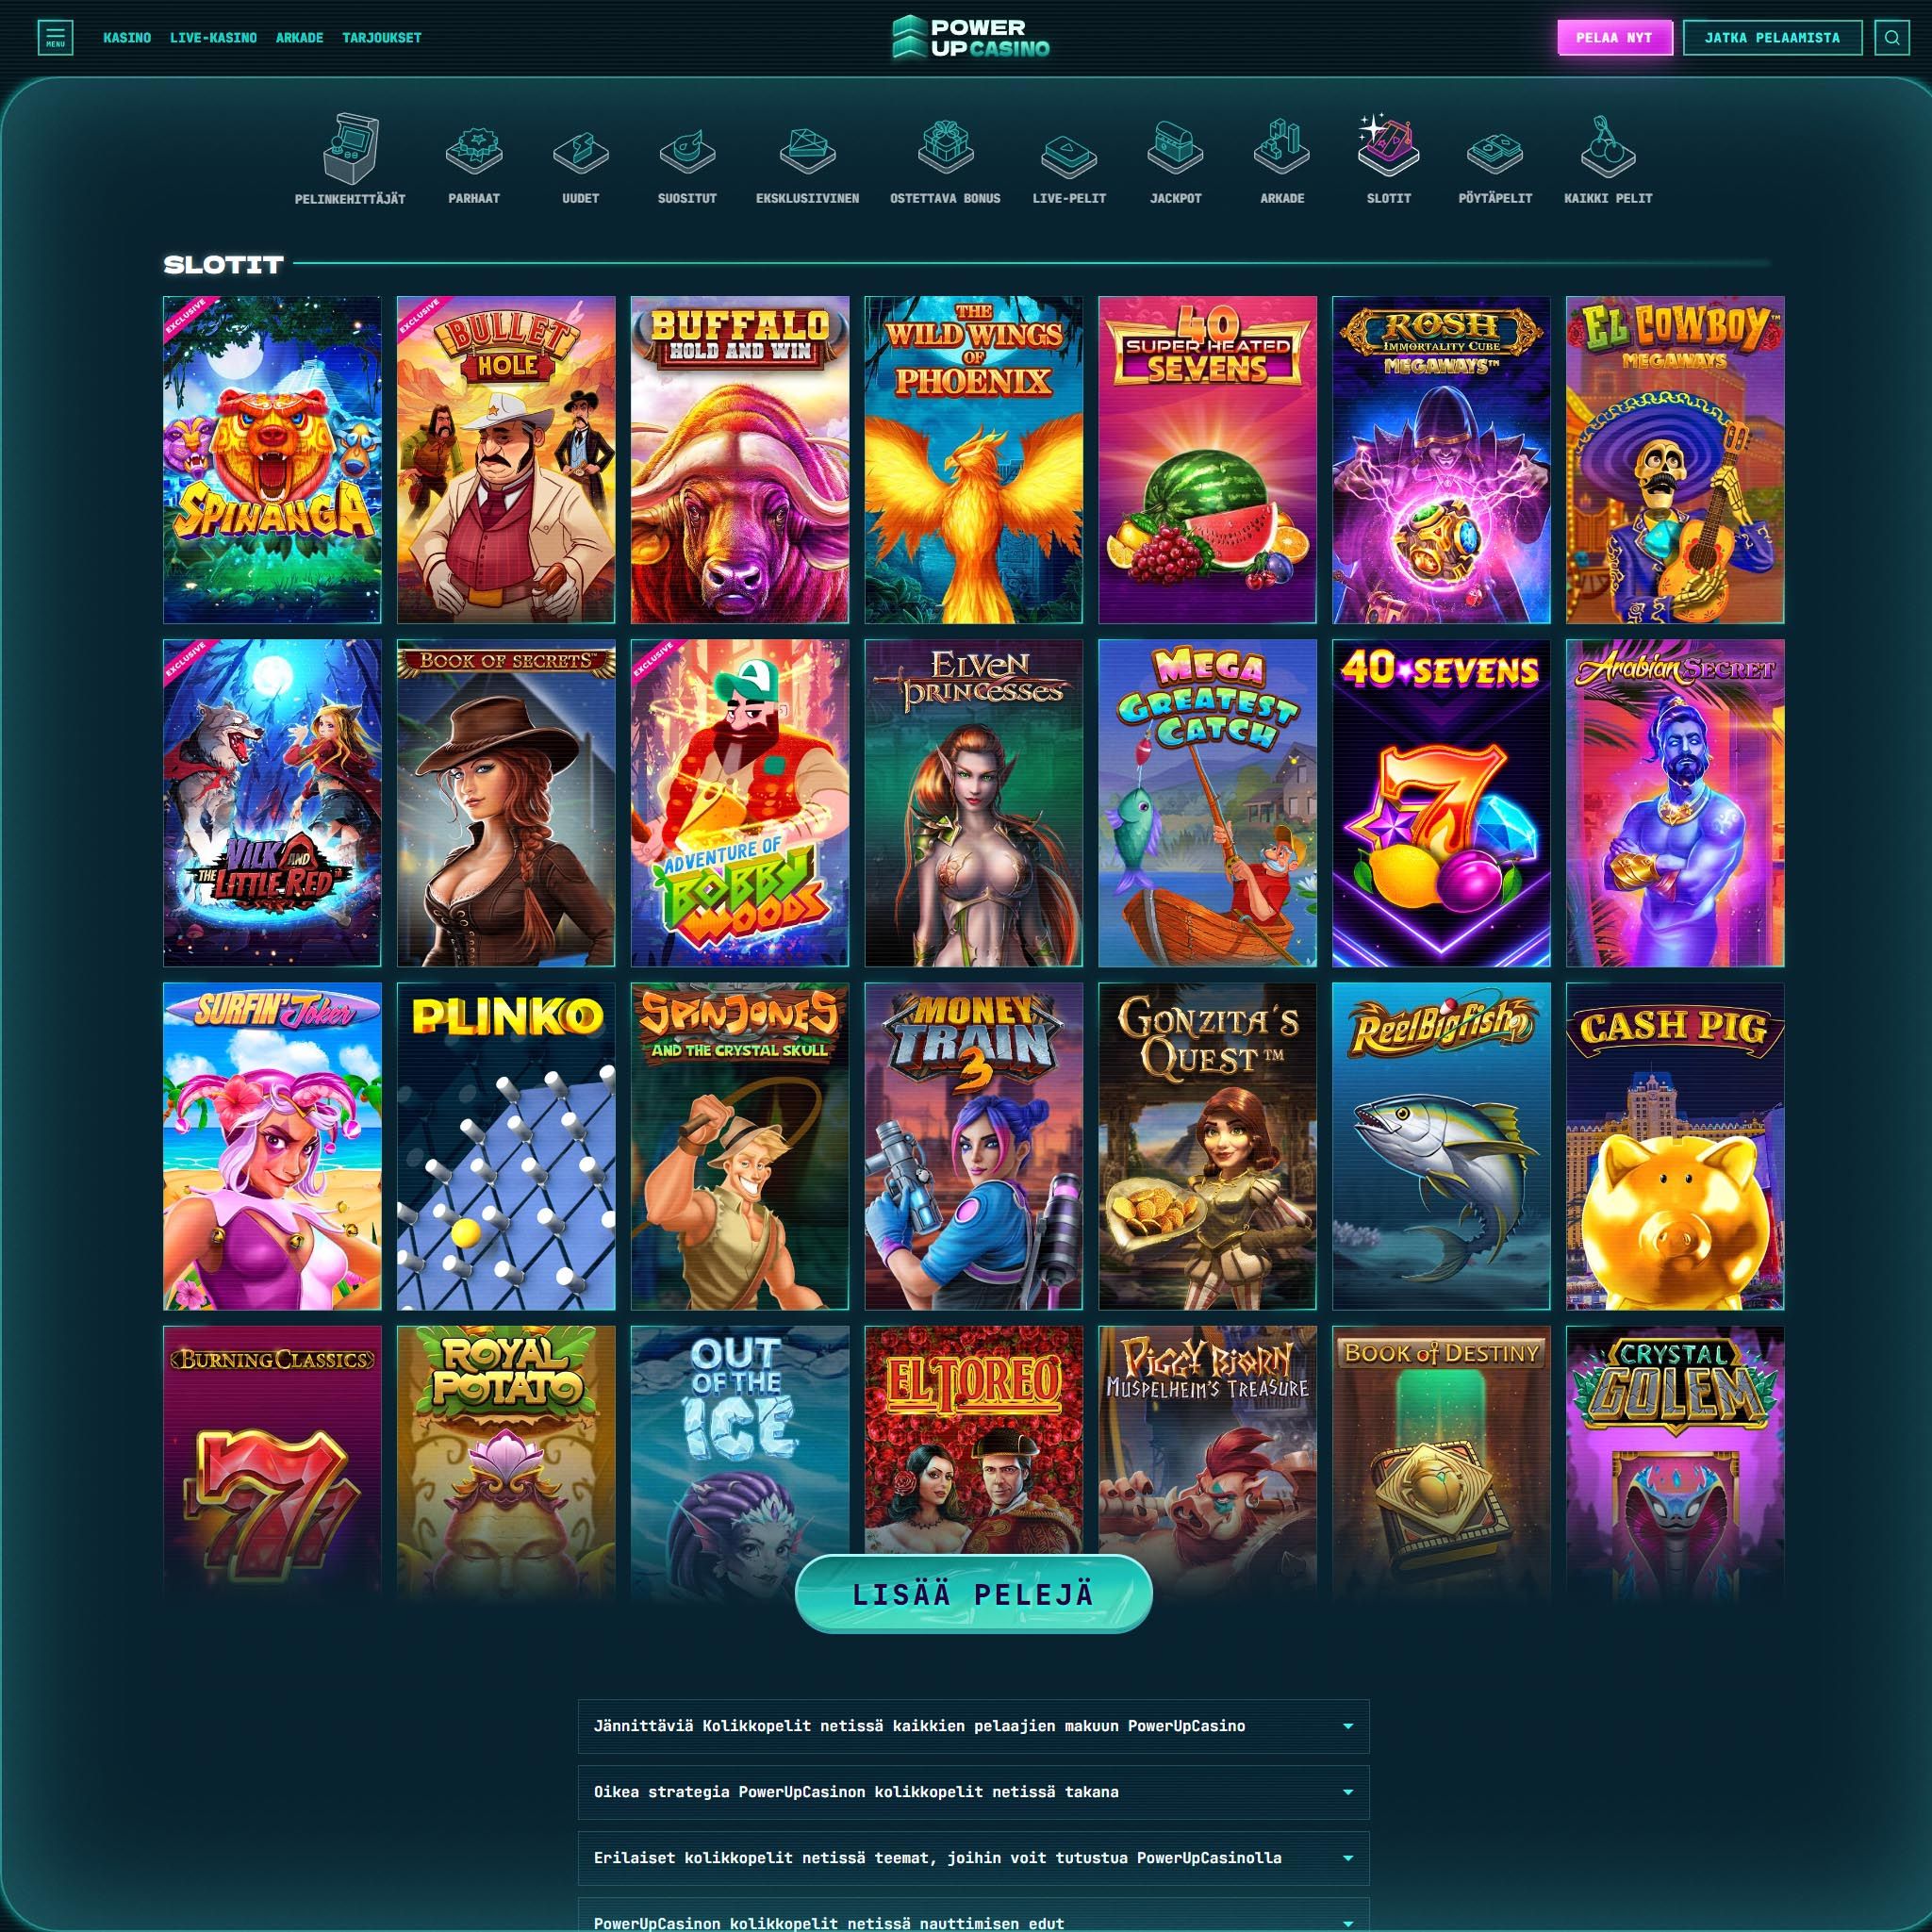 PowerUp Casino game catalogue